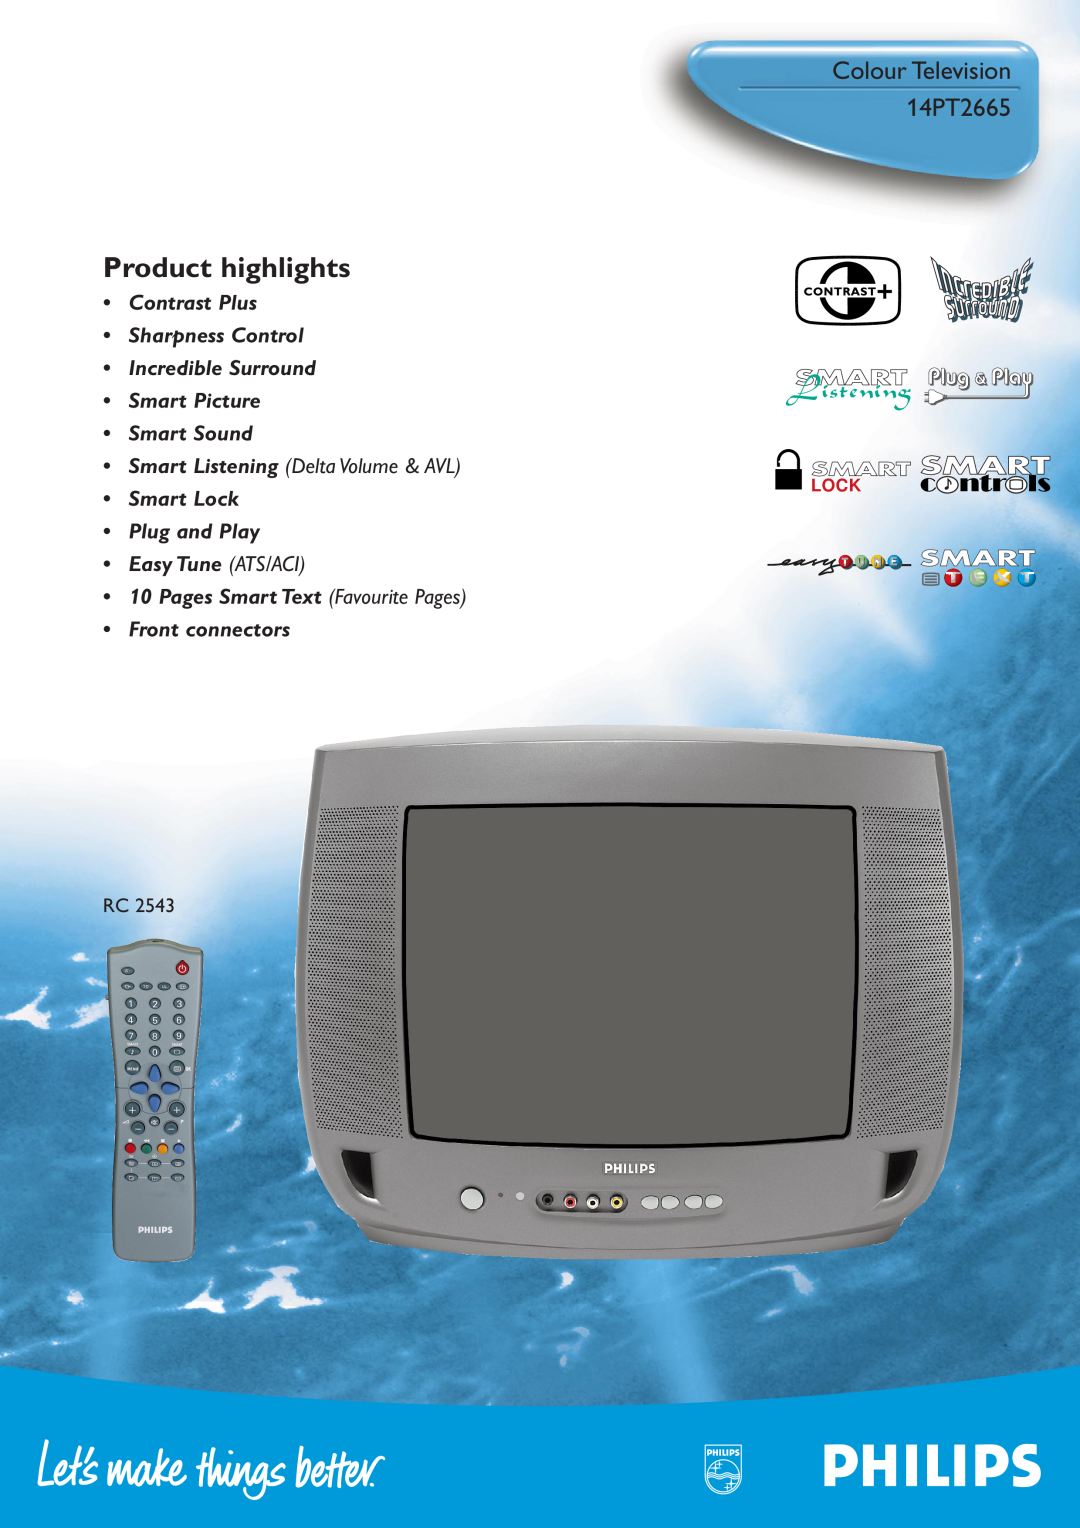 Philips manual Product highlights, Colour Television 14PT2665, Smart Sound, Smart Listening Delta Volume & AVL, Lock 